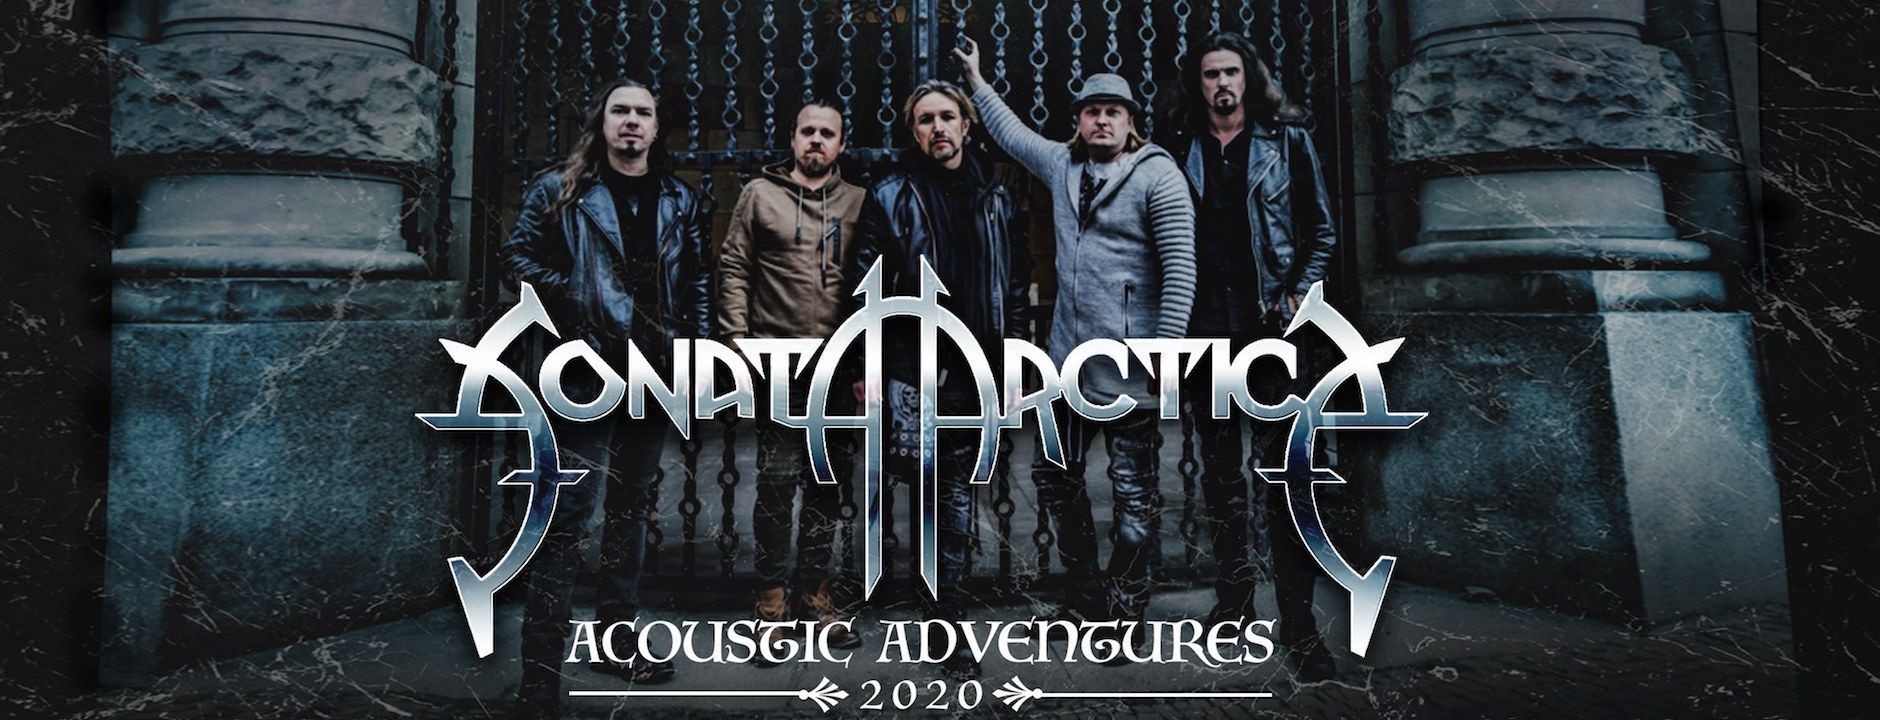 "Acoustic Adventures"-Konzert im Live-Stream angekündigt